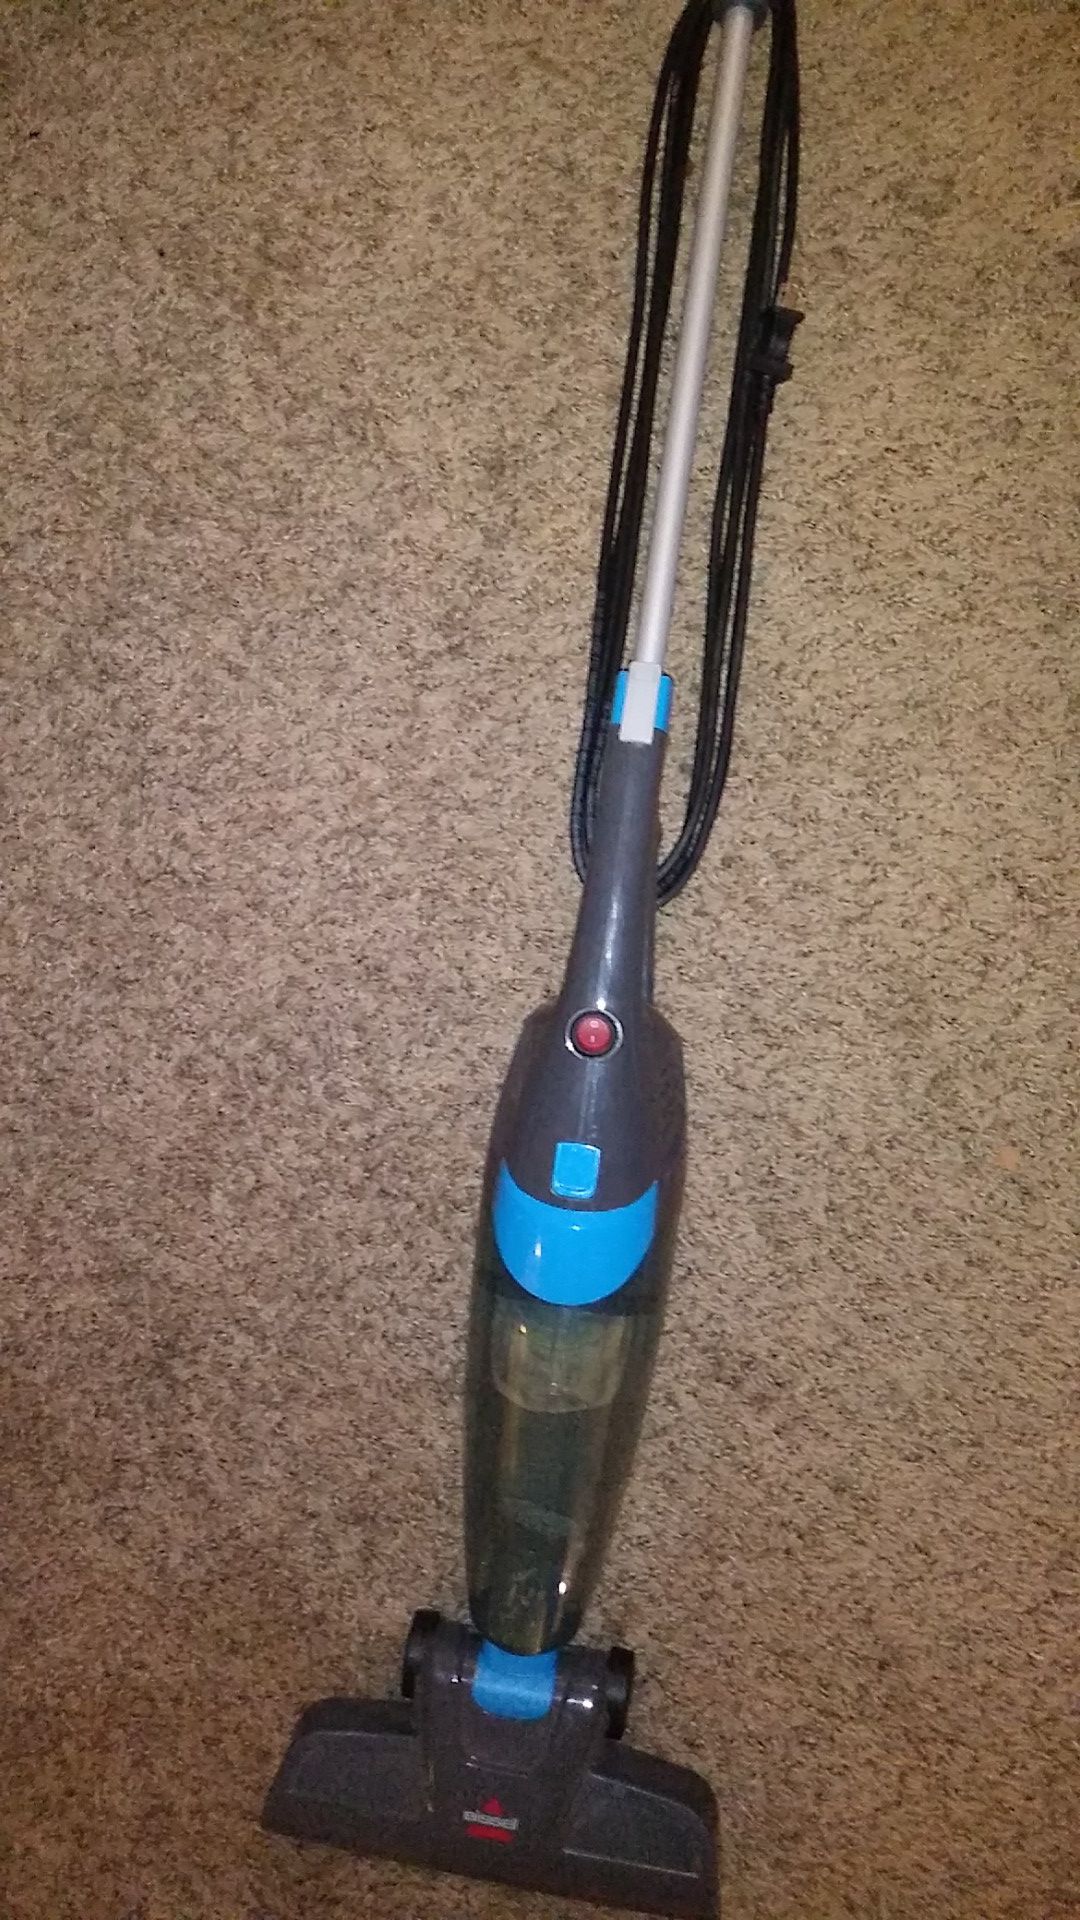 Bissel lightweight vacuum cleaner